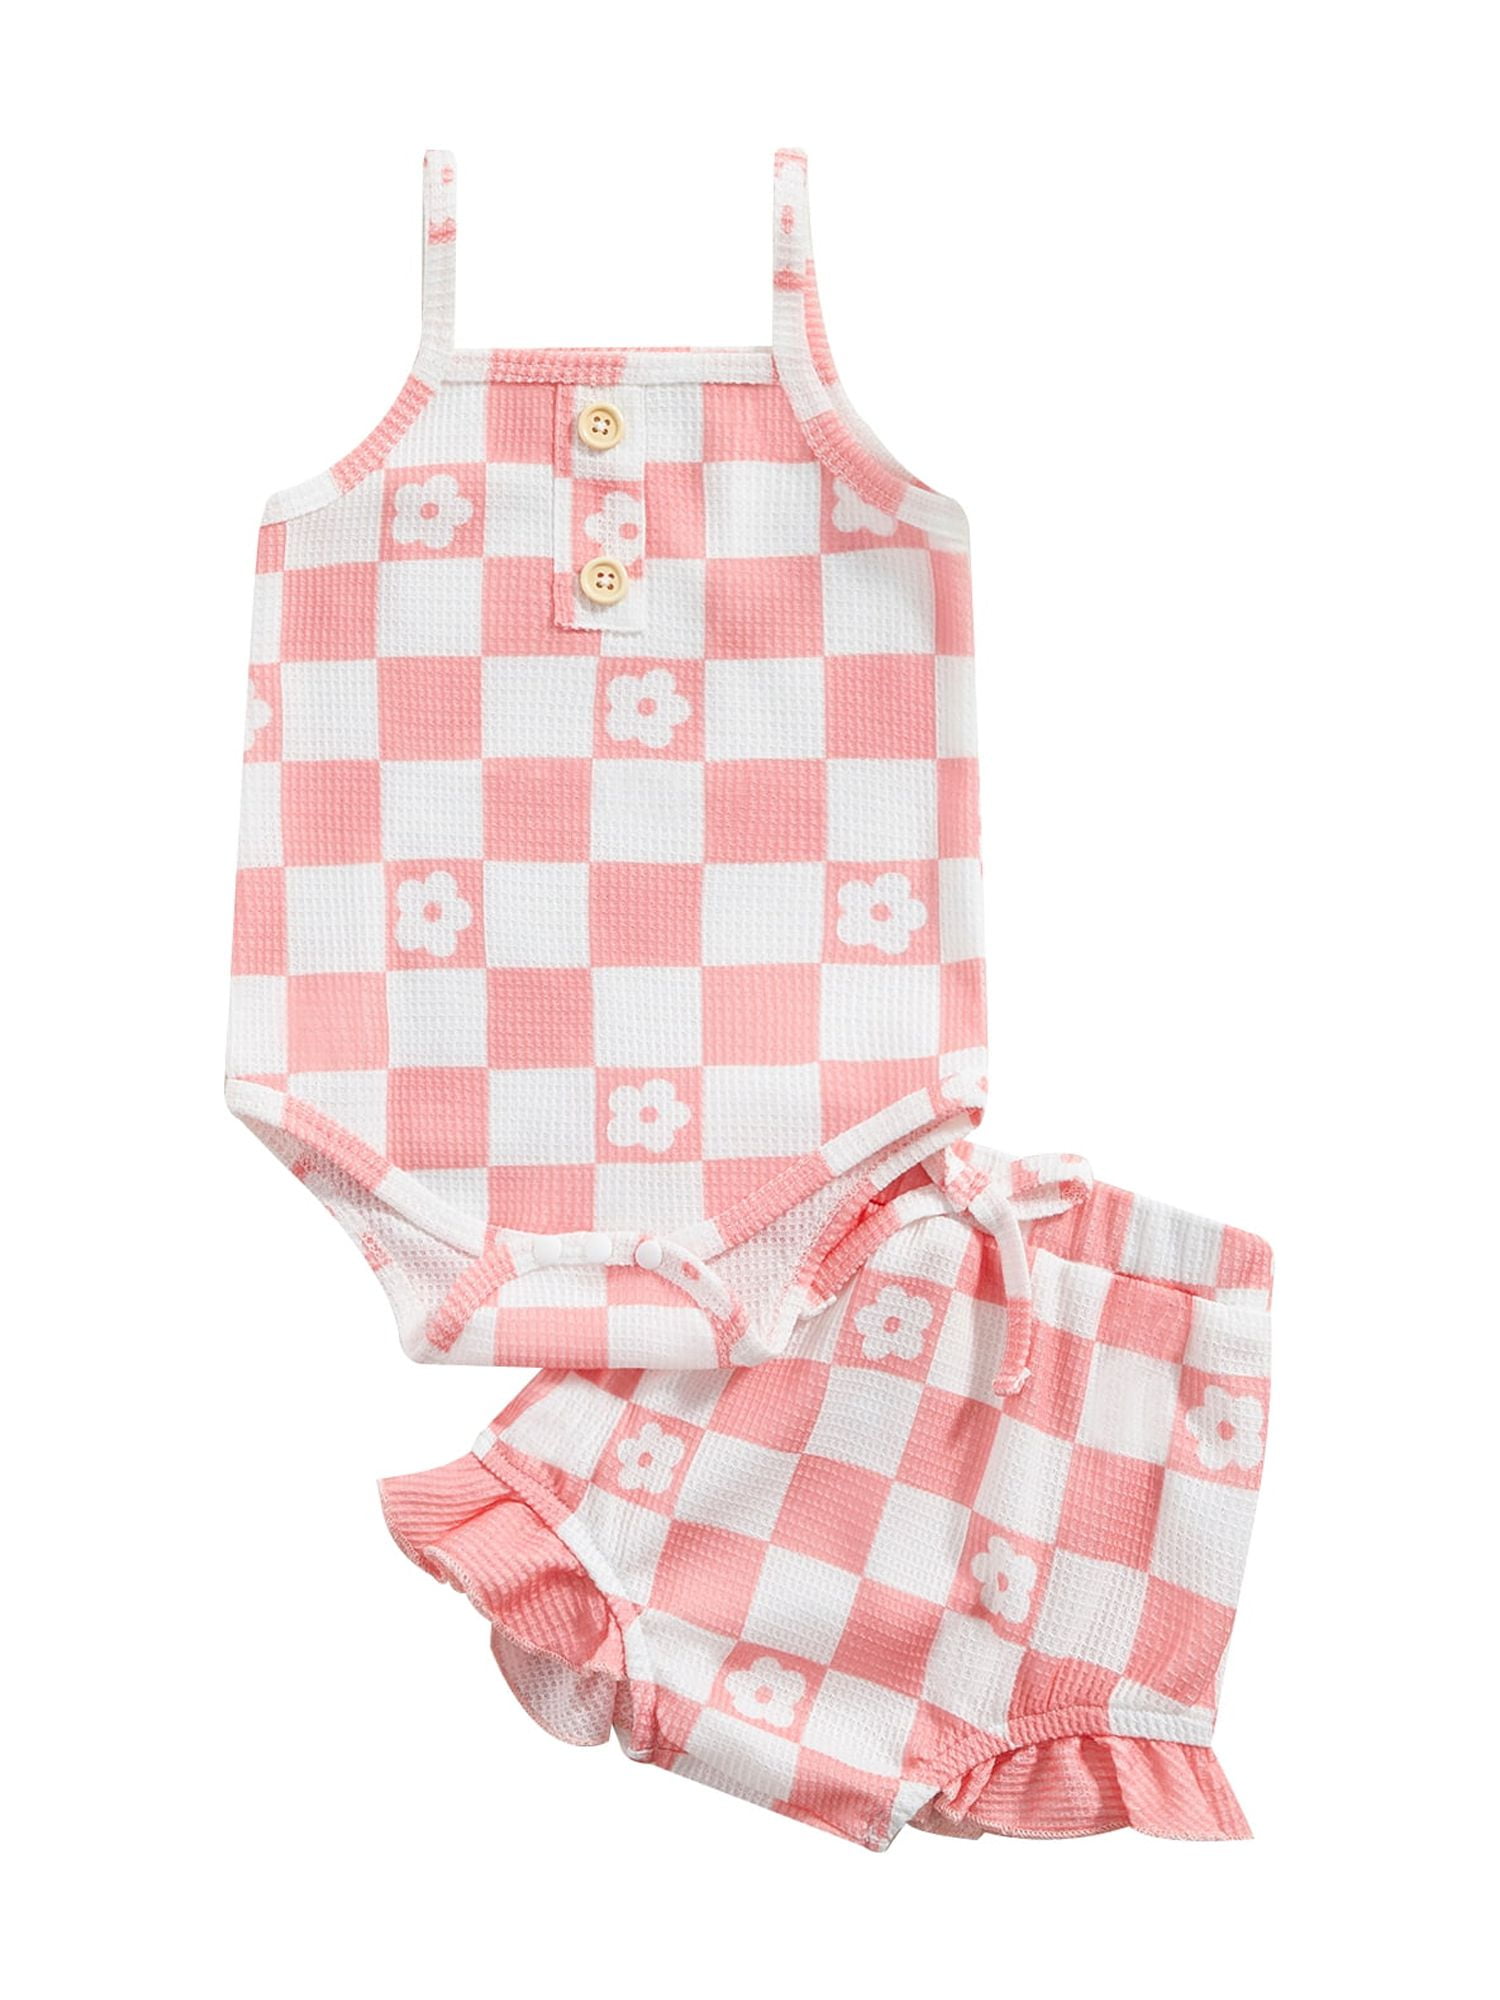 Bagilaanoe 2pcs Newborn Baby Girl Short Pants Set Checkerboard